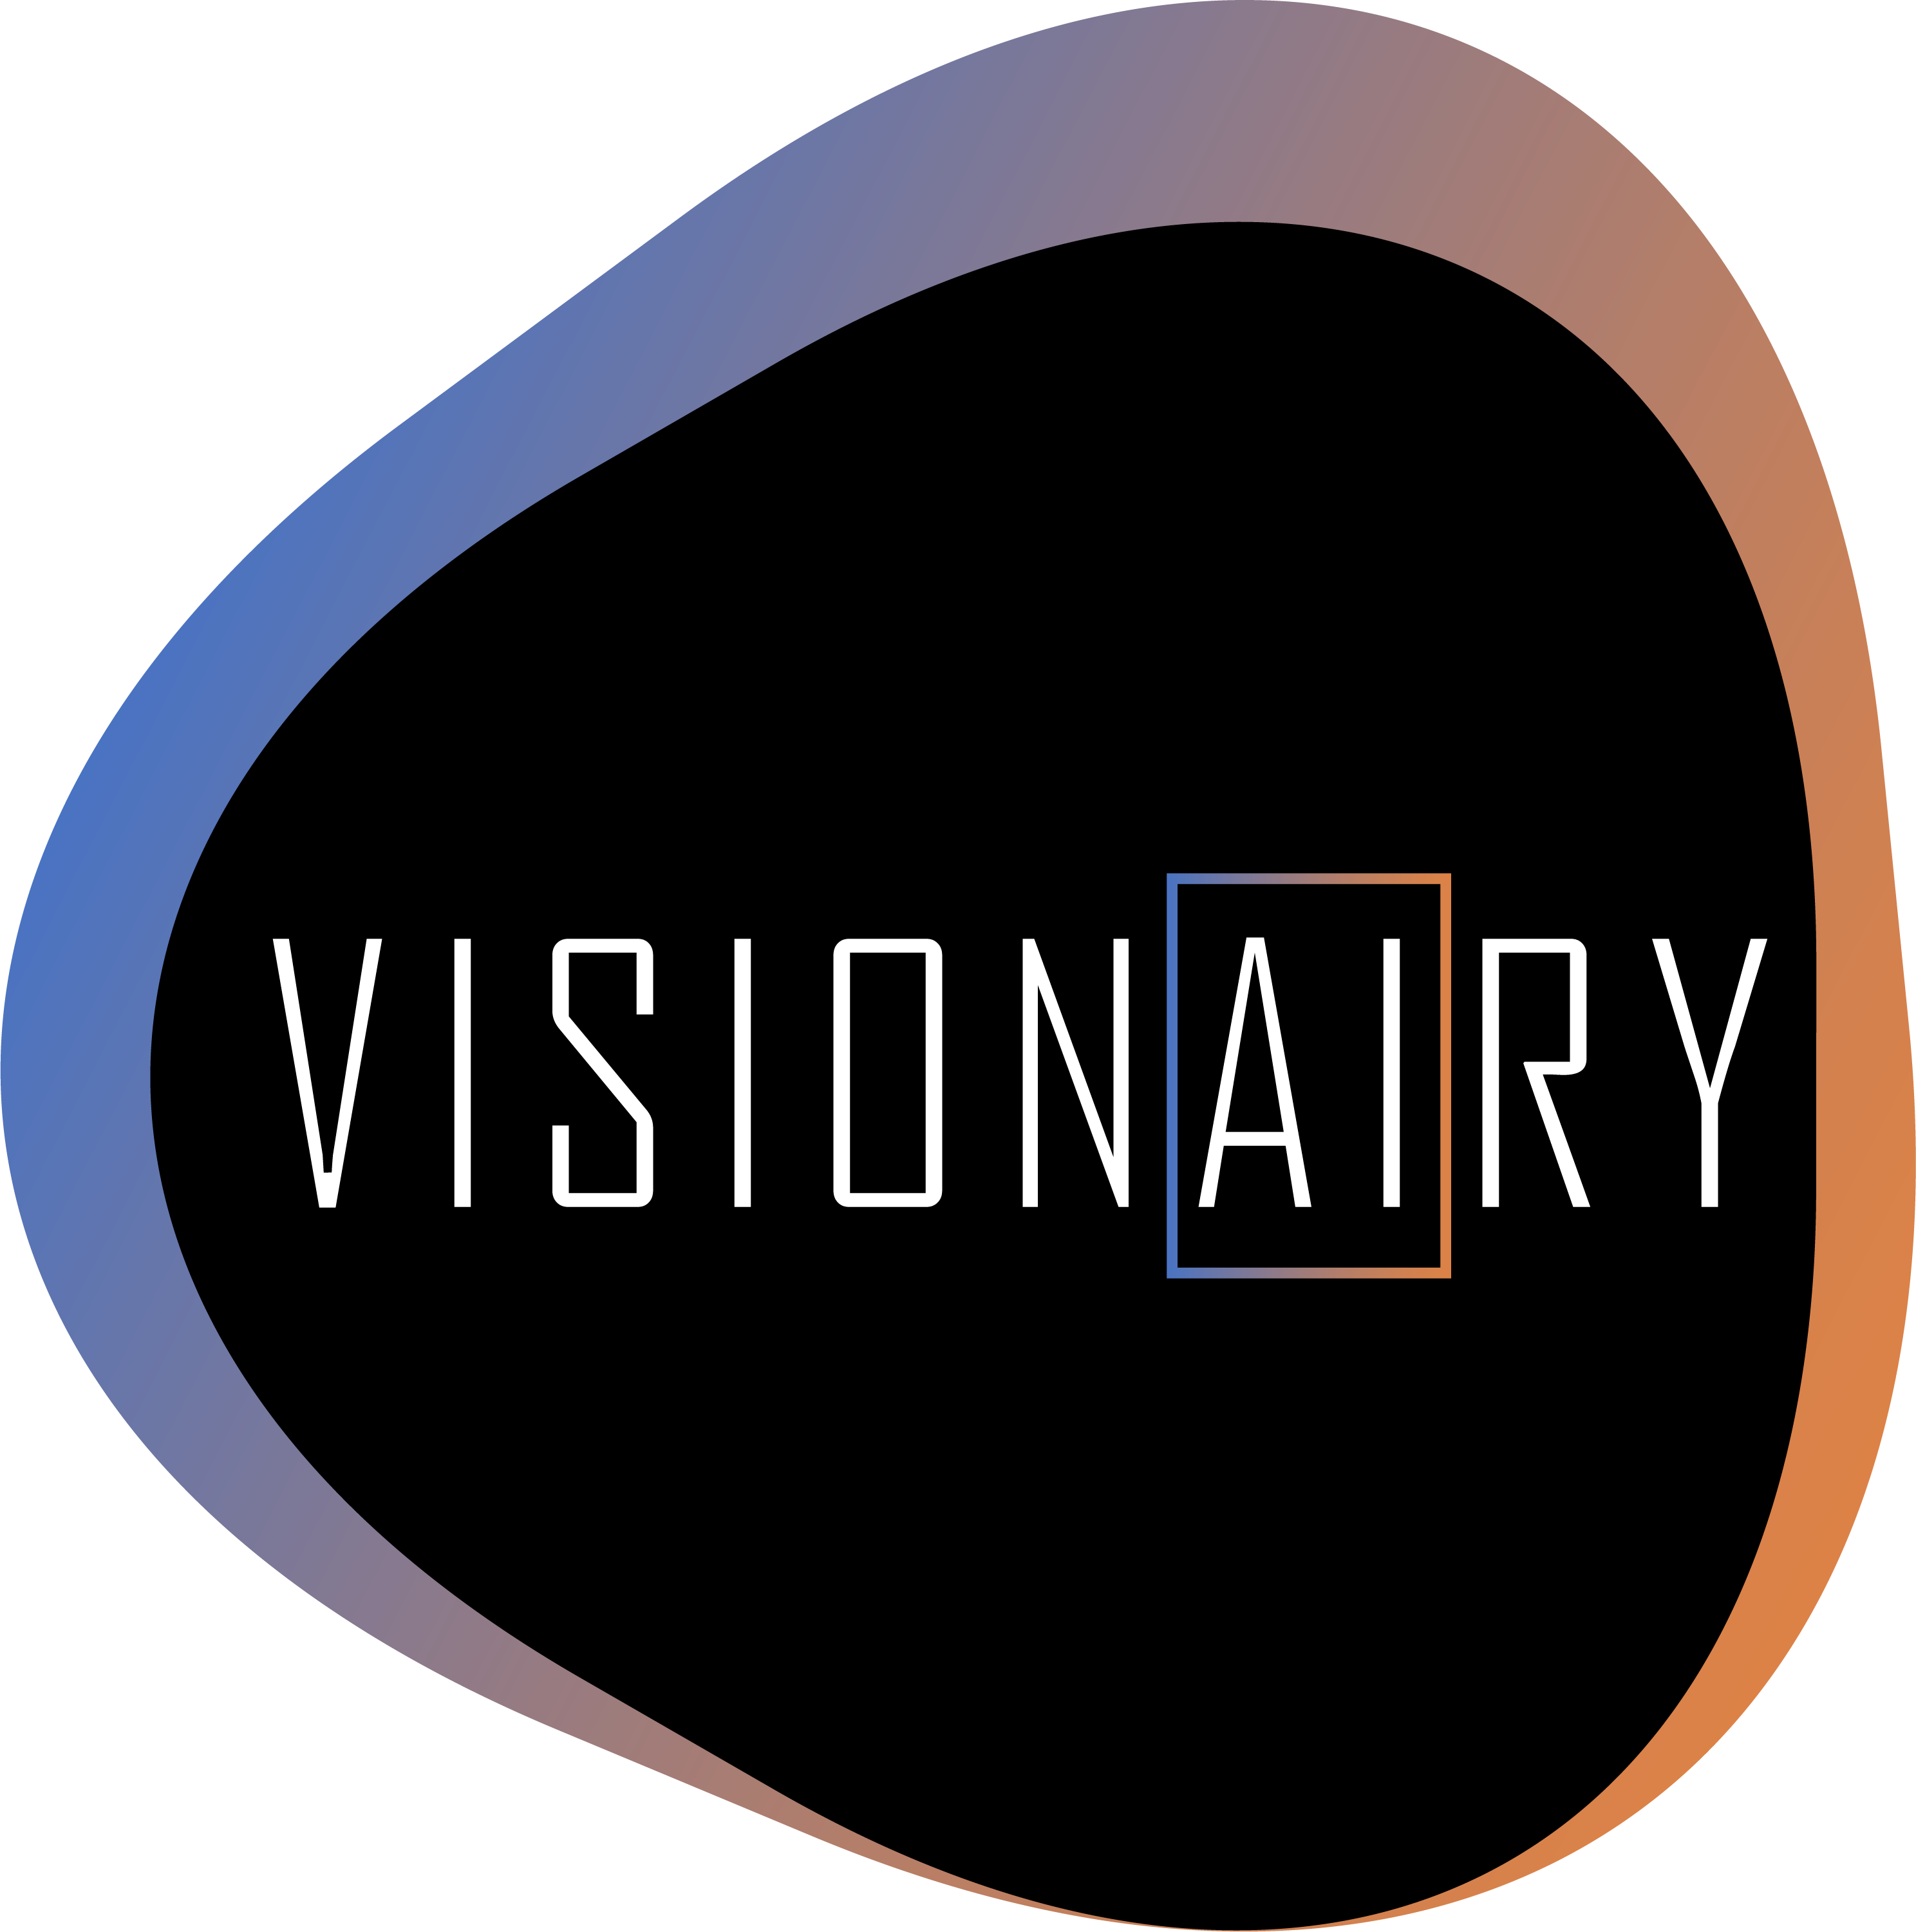 Visionairy